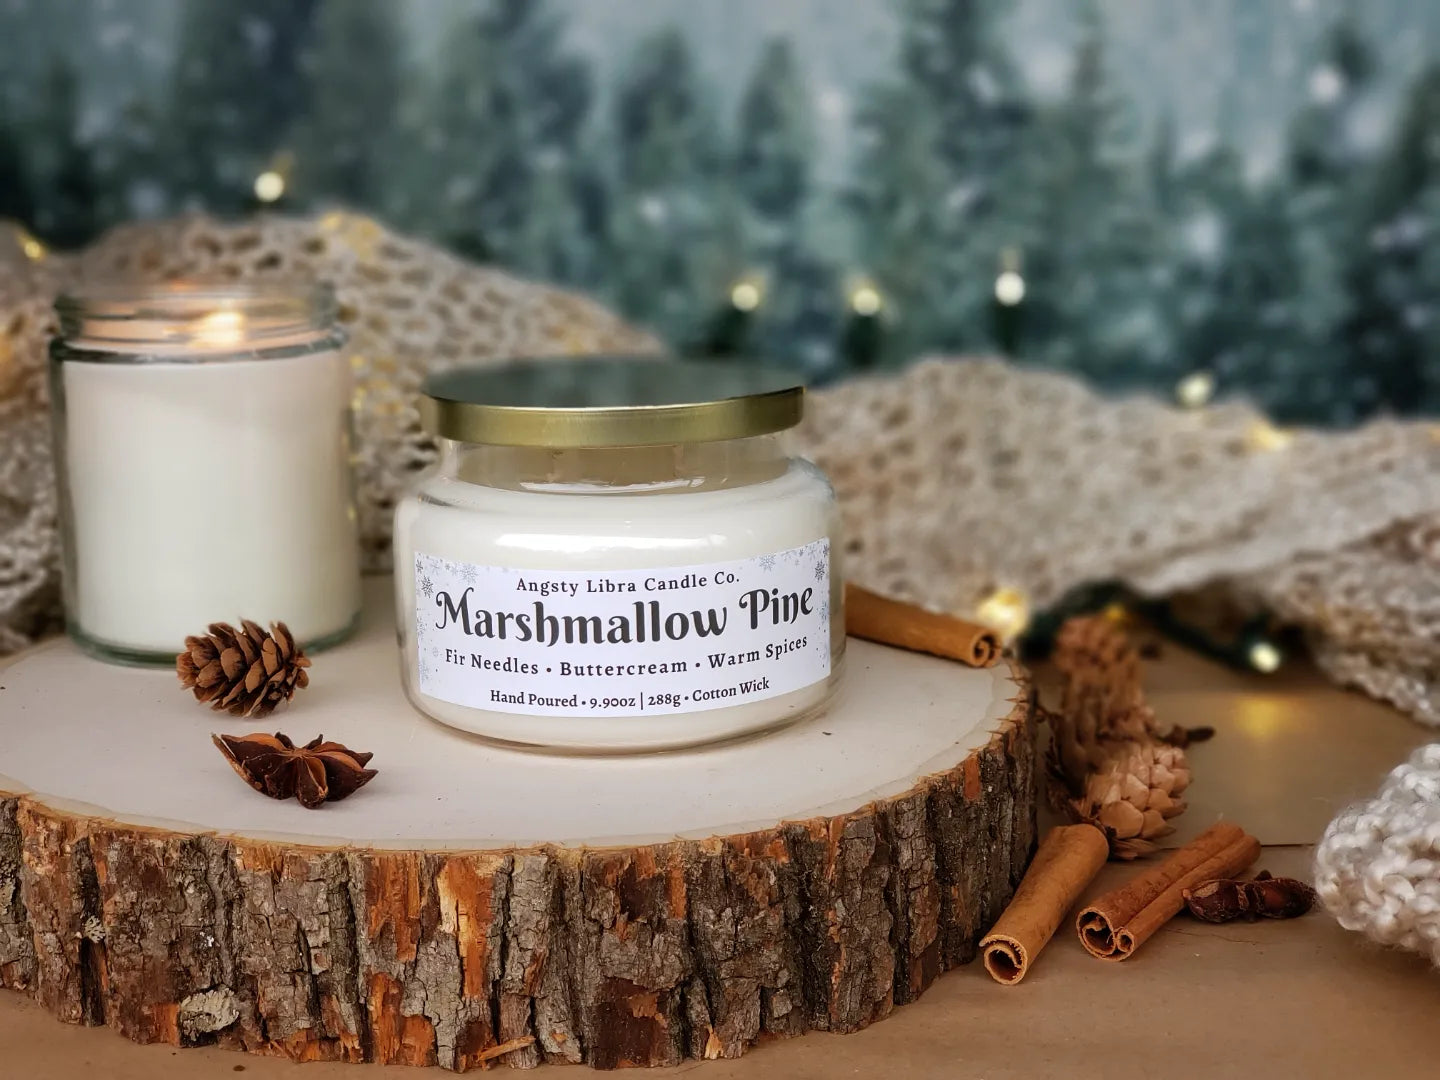 Marshmallow Pine